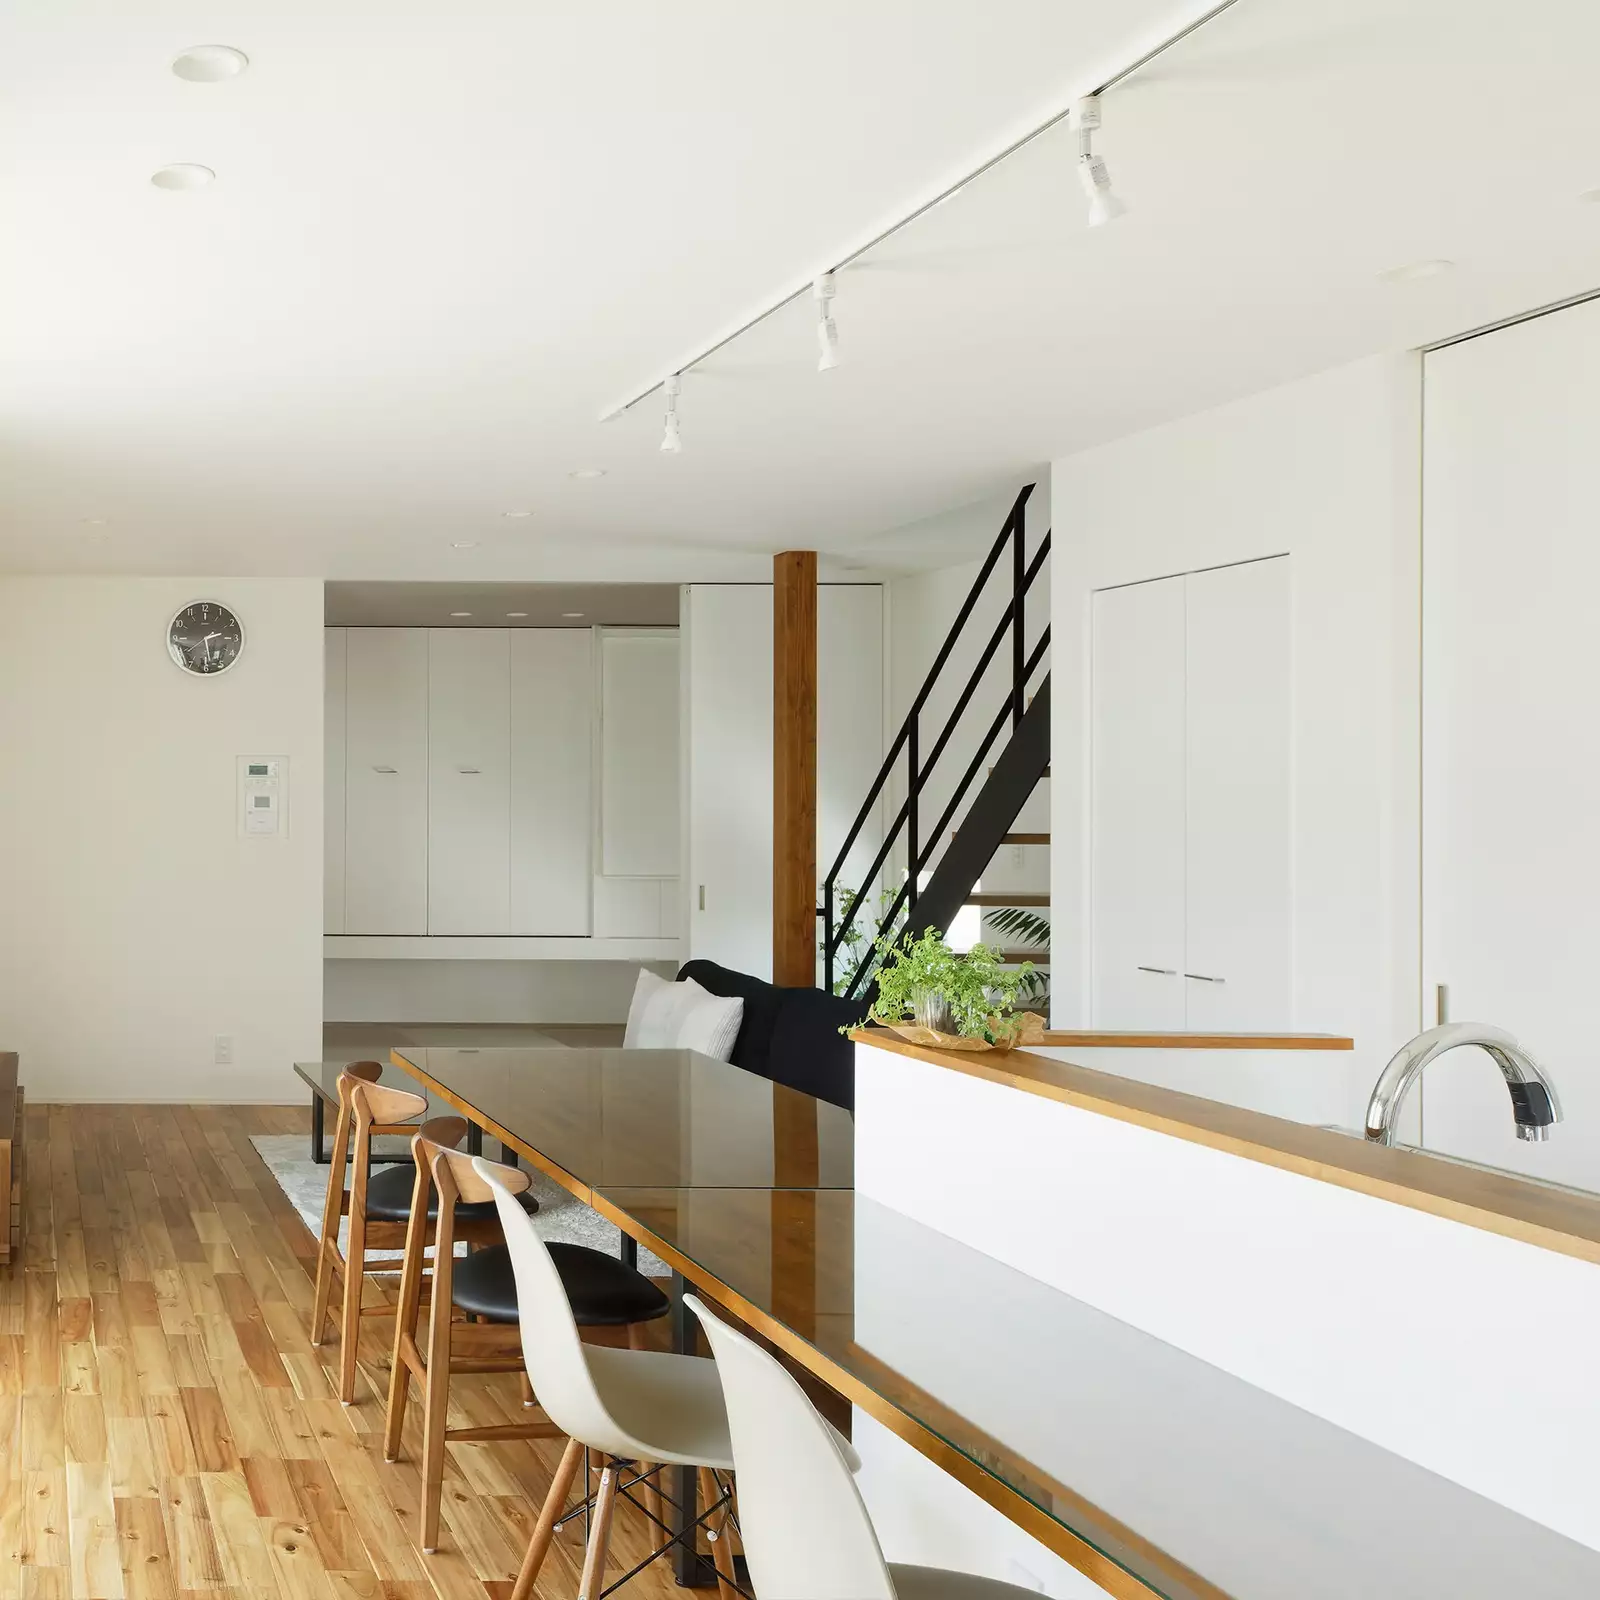 R+houseの物件のリビングダイニングの写真です。木目と白を基調とした室内に黒色の家具や階段が映えます